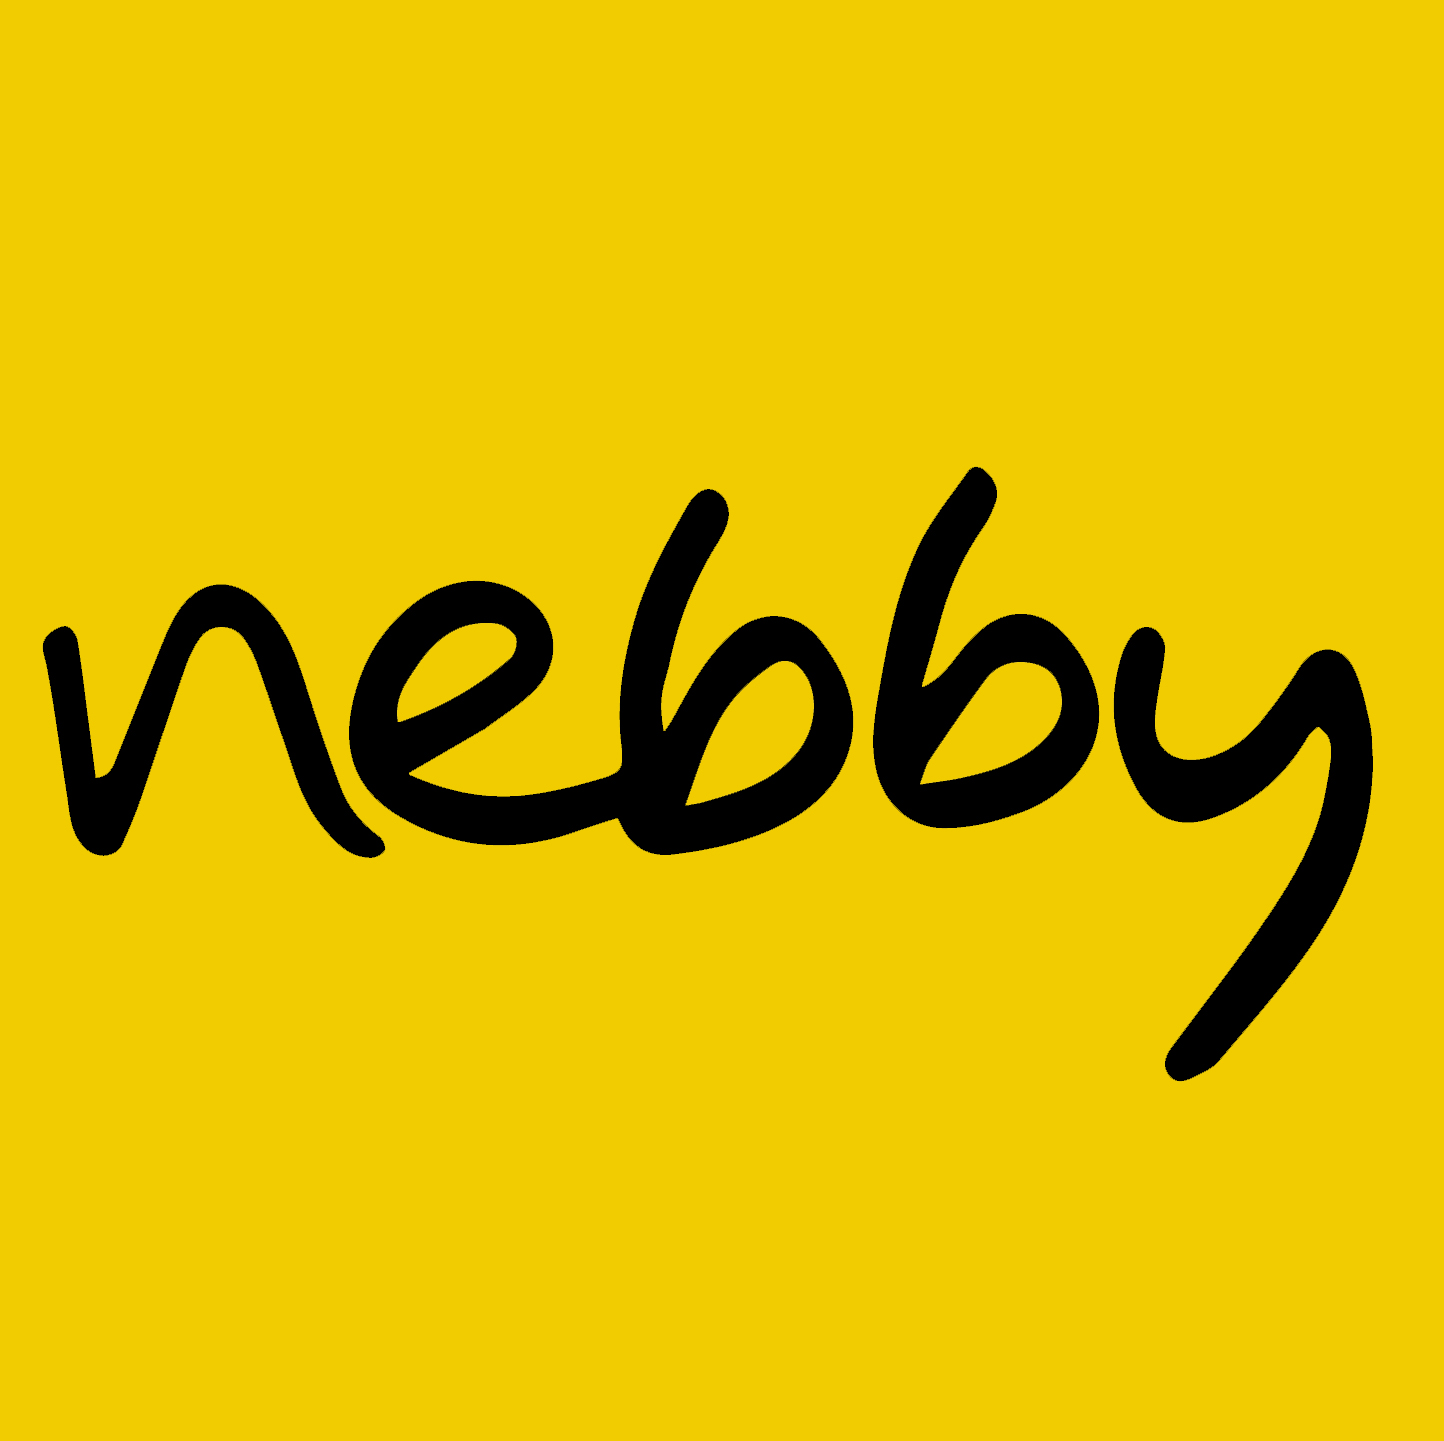 Nebby